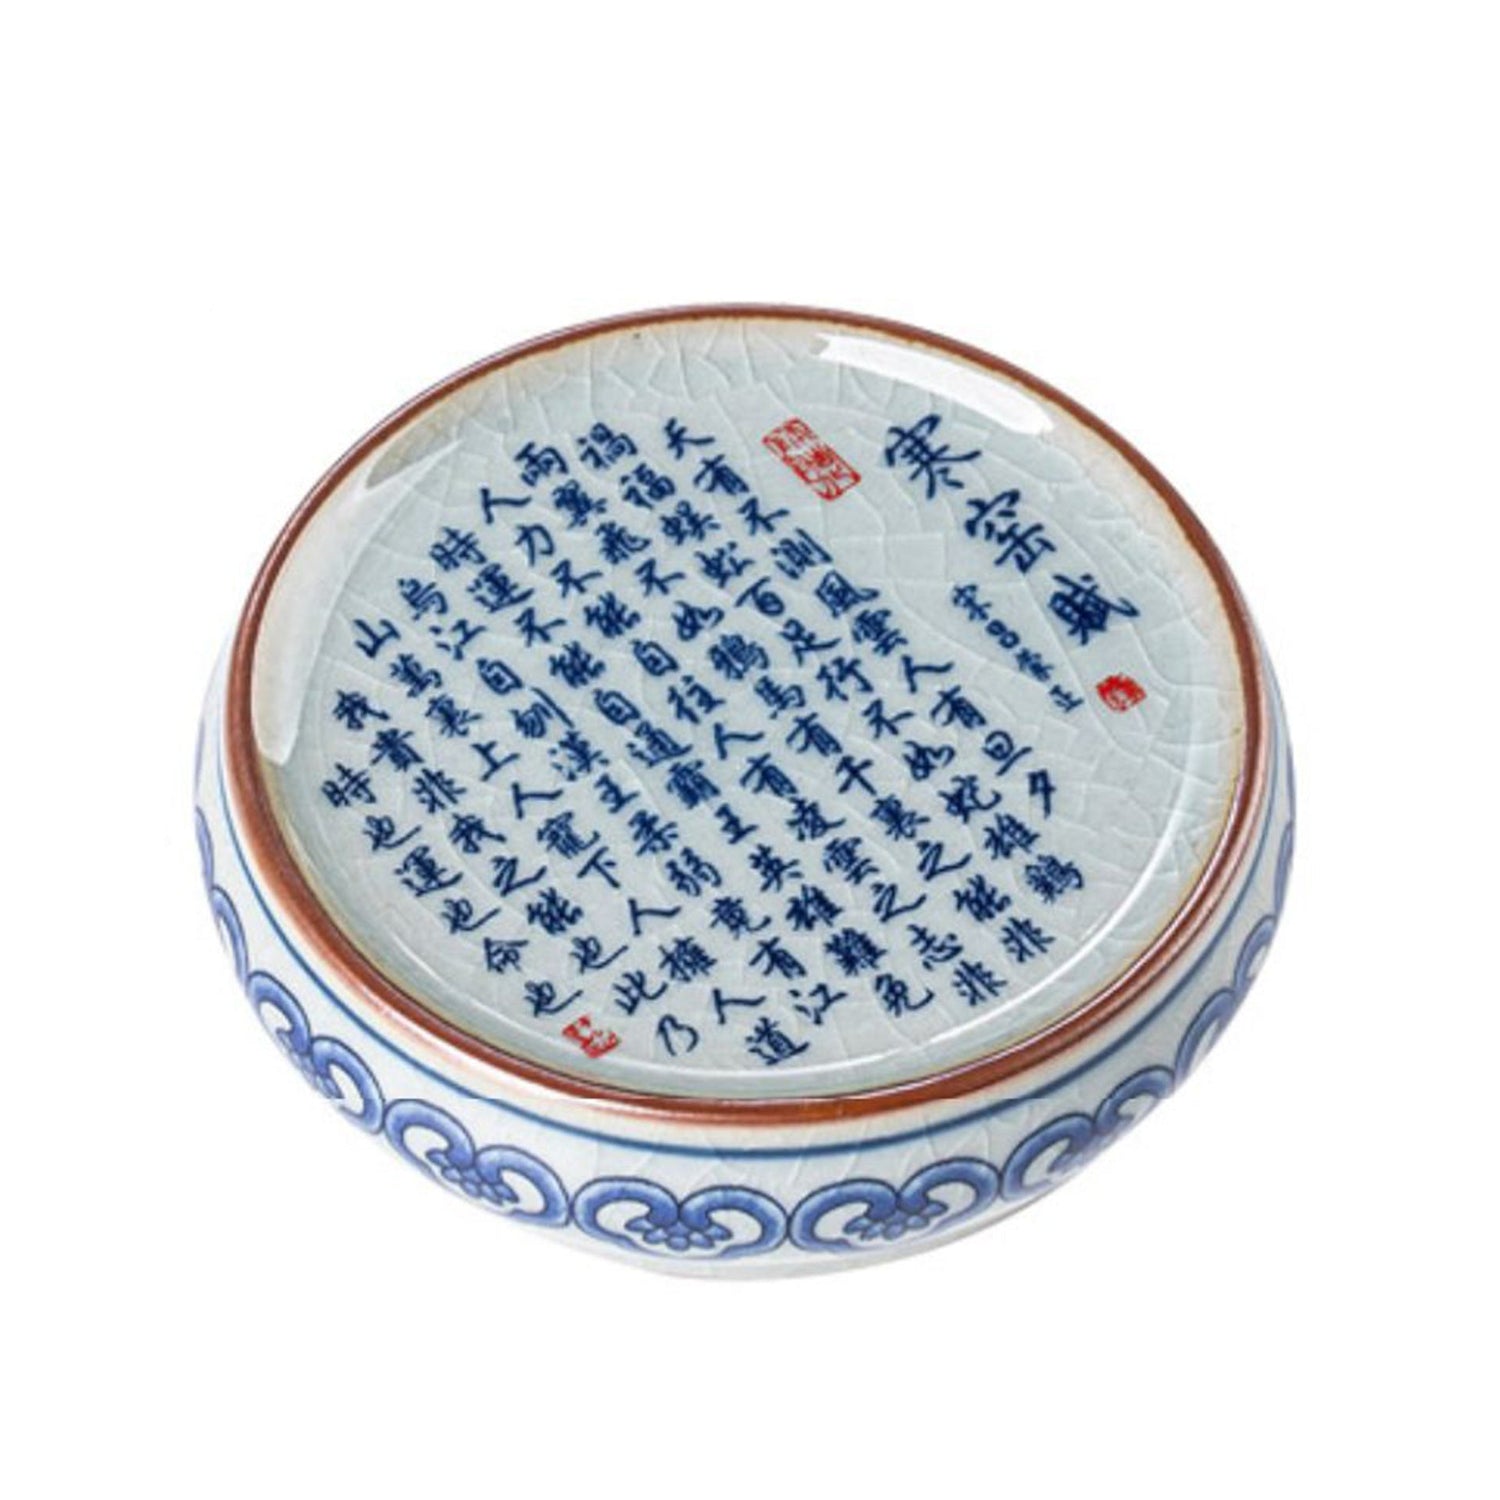 Retro Blue and White Calligraphy Tea Pot Cover